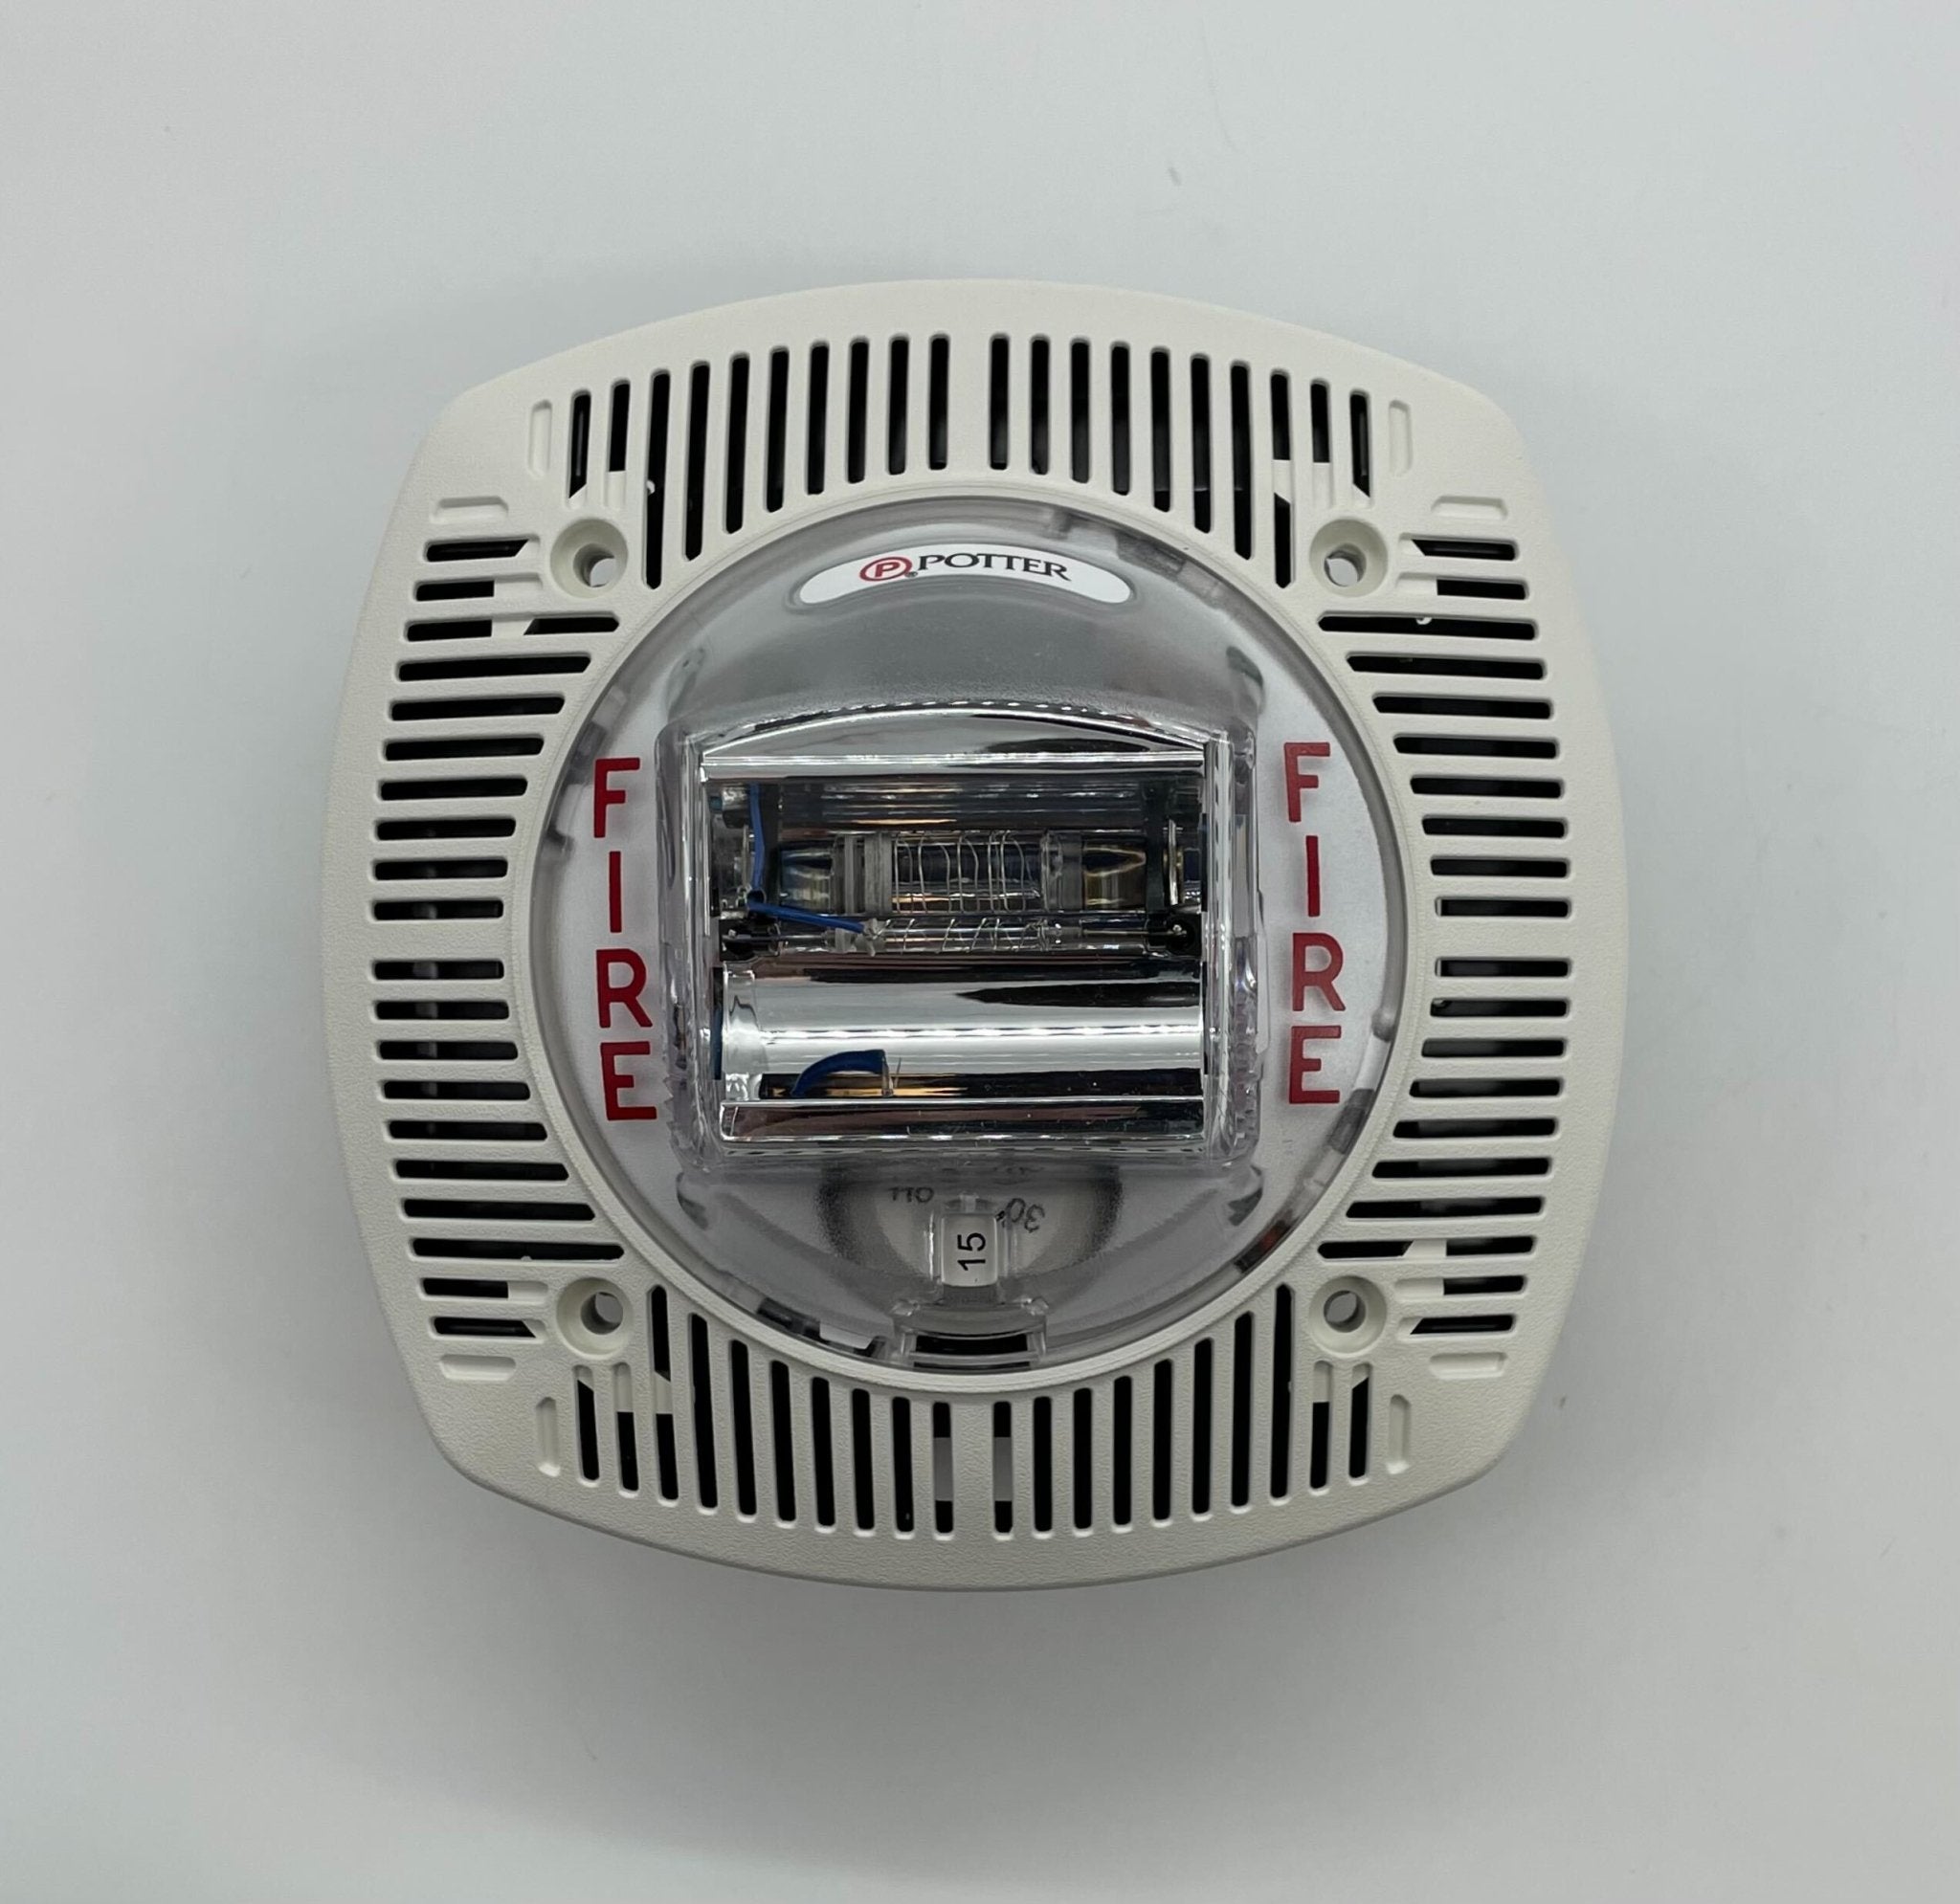 Potter SPKSTR-24WLPW - The Fire Alarm Supplier